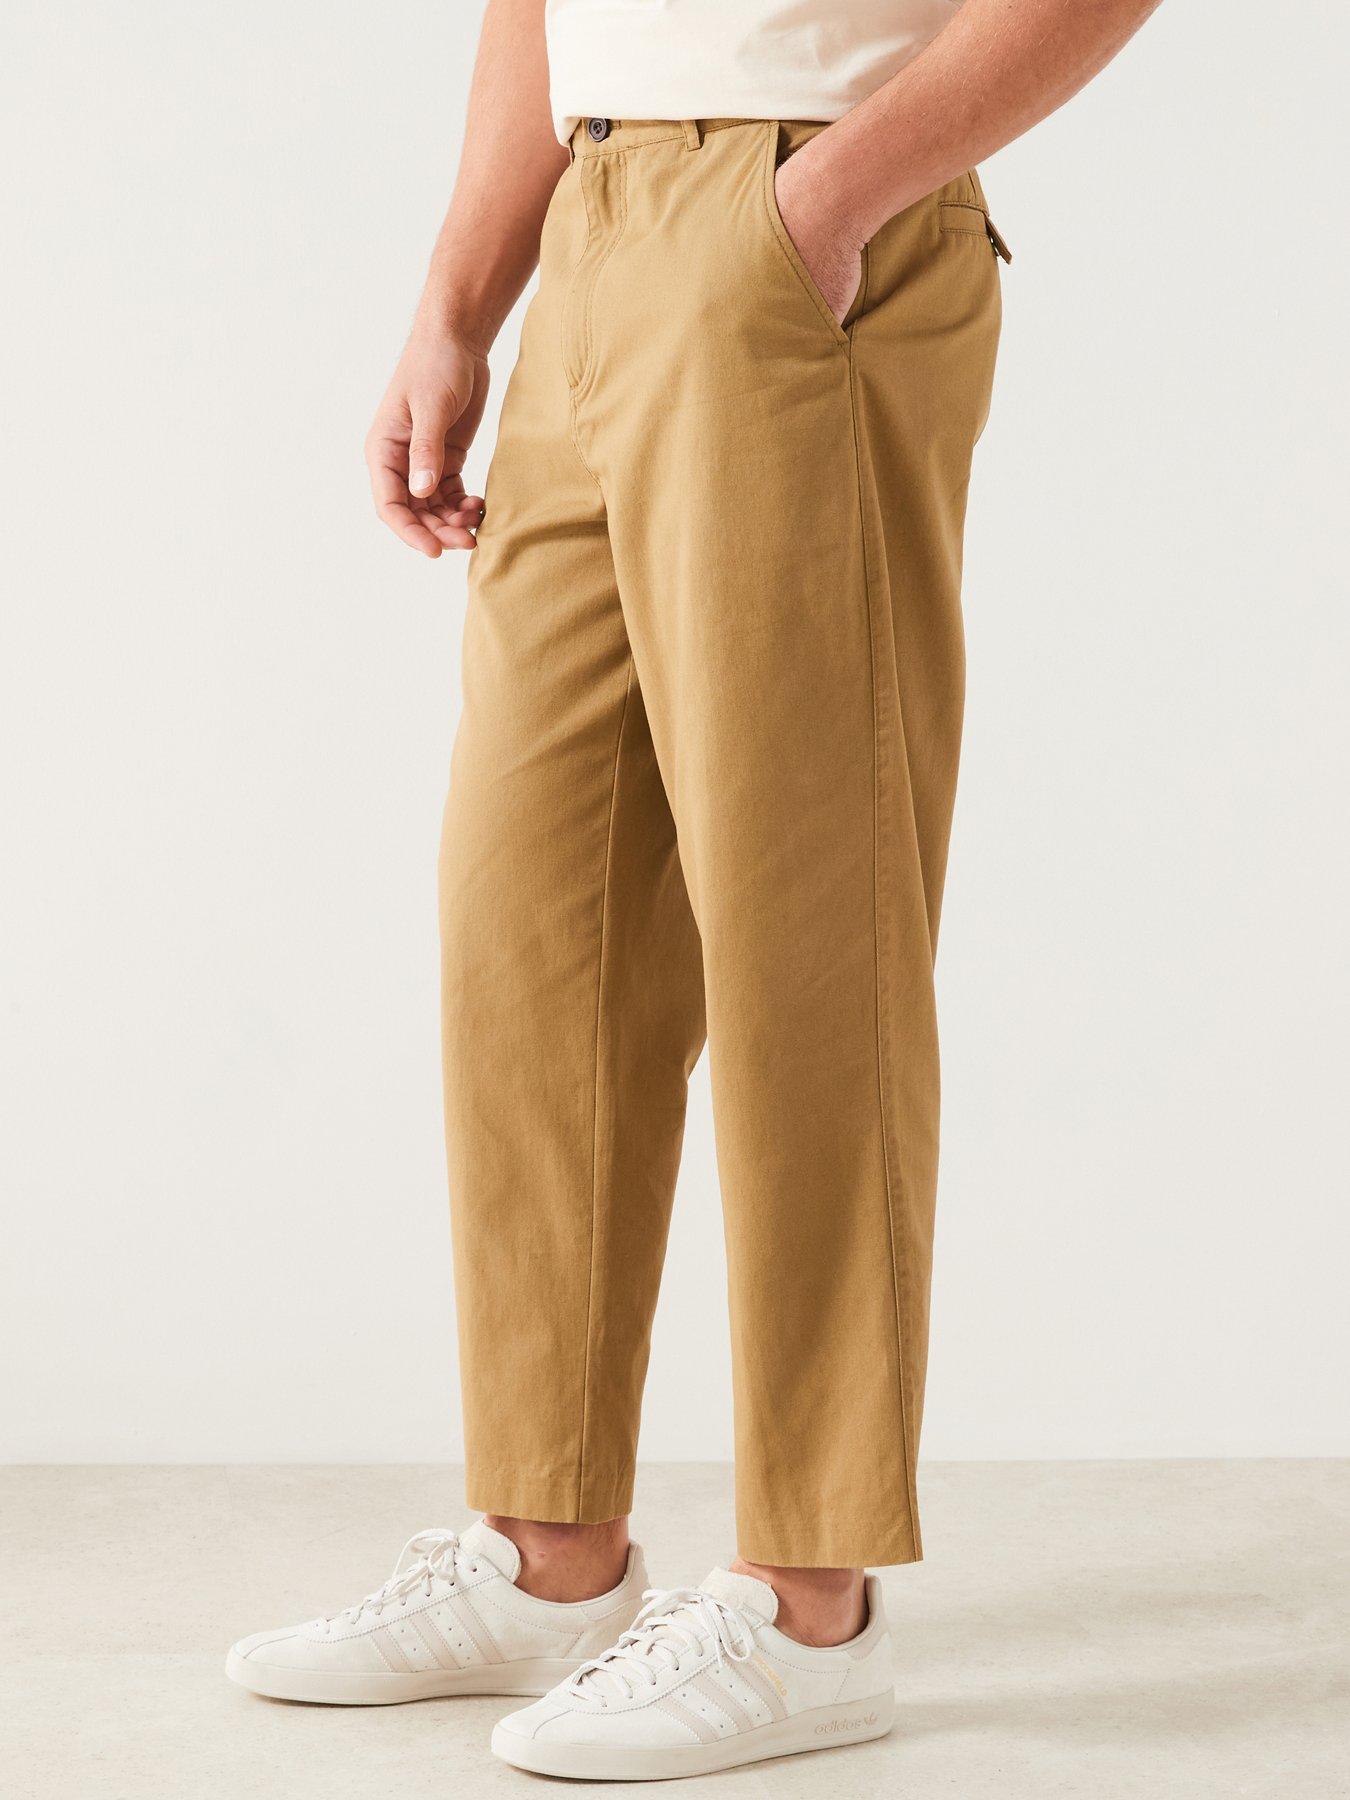 Buy Vintage Trousers Mens Vintage Farah Khaki Trousers & Belt 34W 33L  Vintage Clothing, Farah Trousers, Mens Trousers Online in India - Etsy